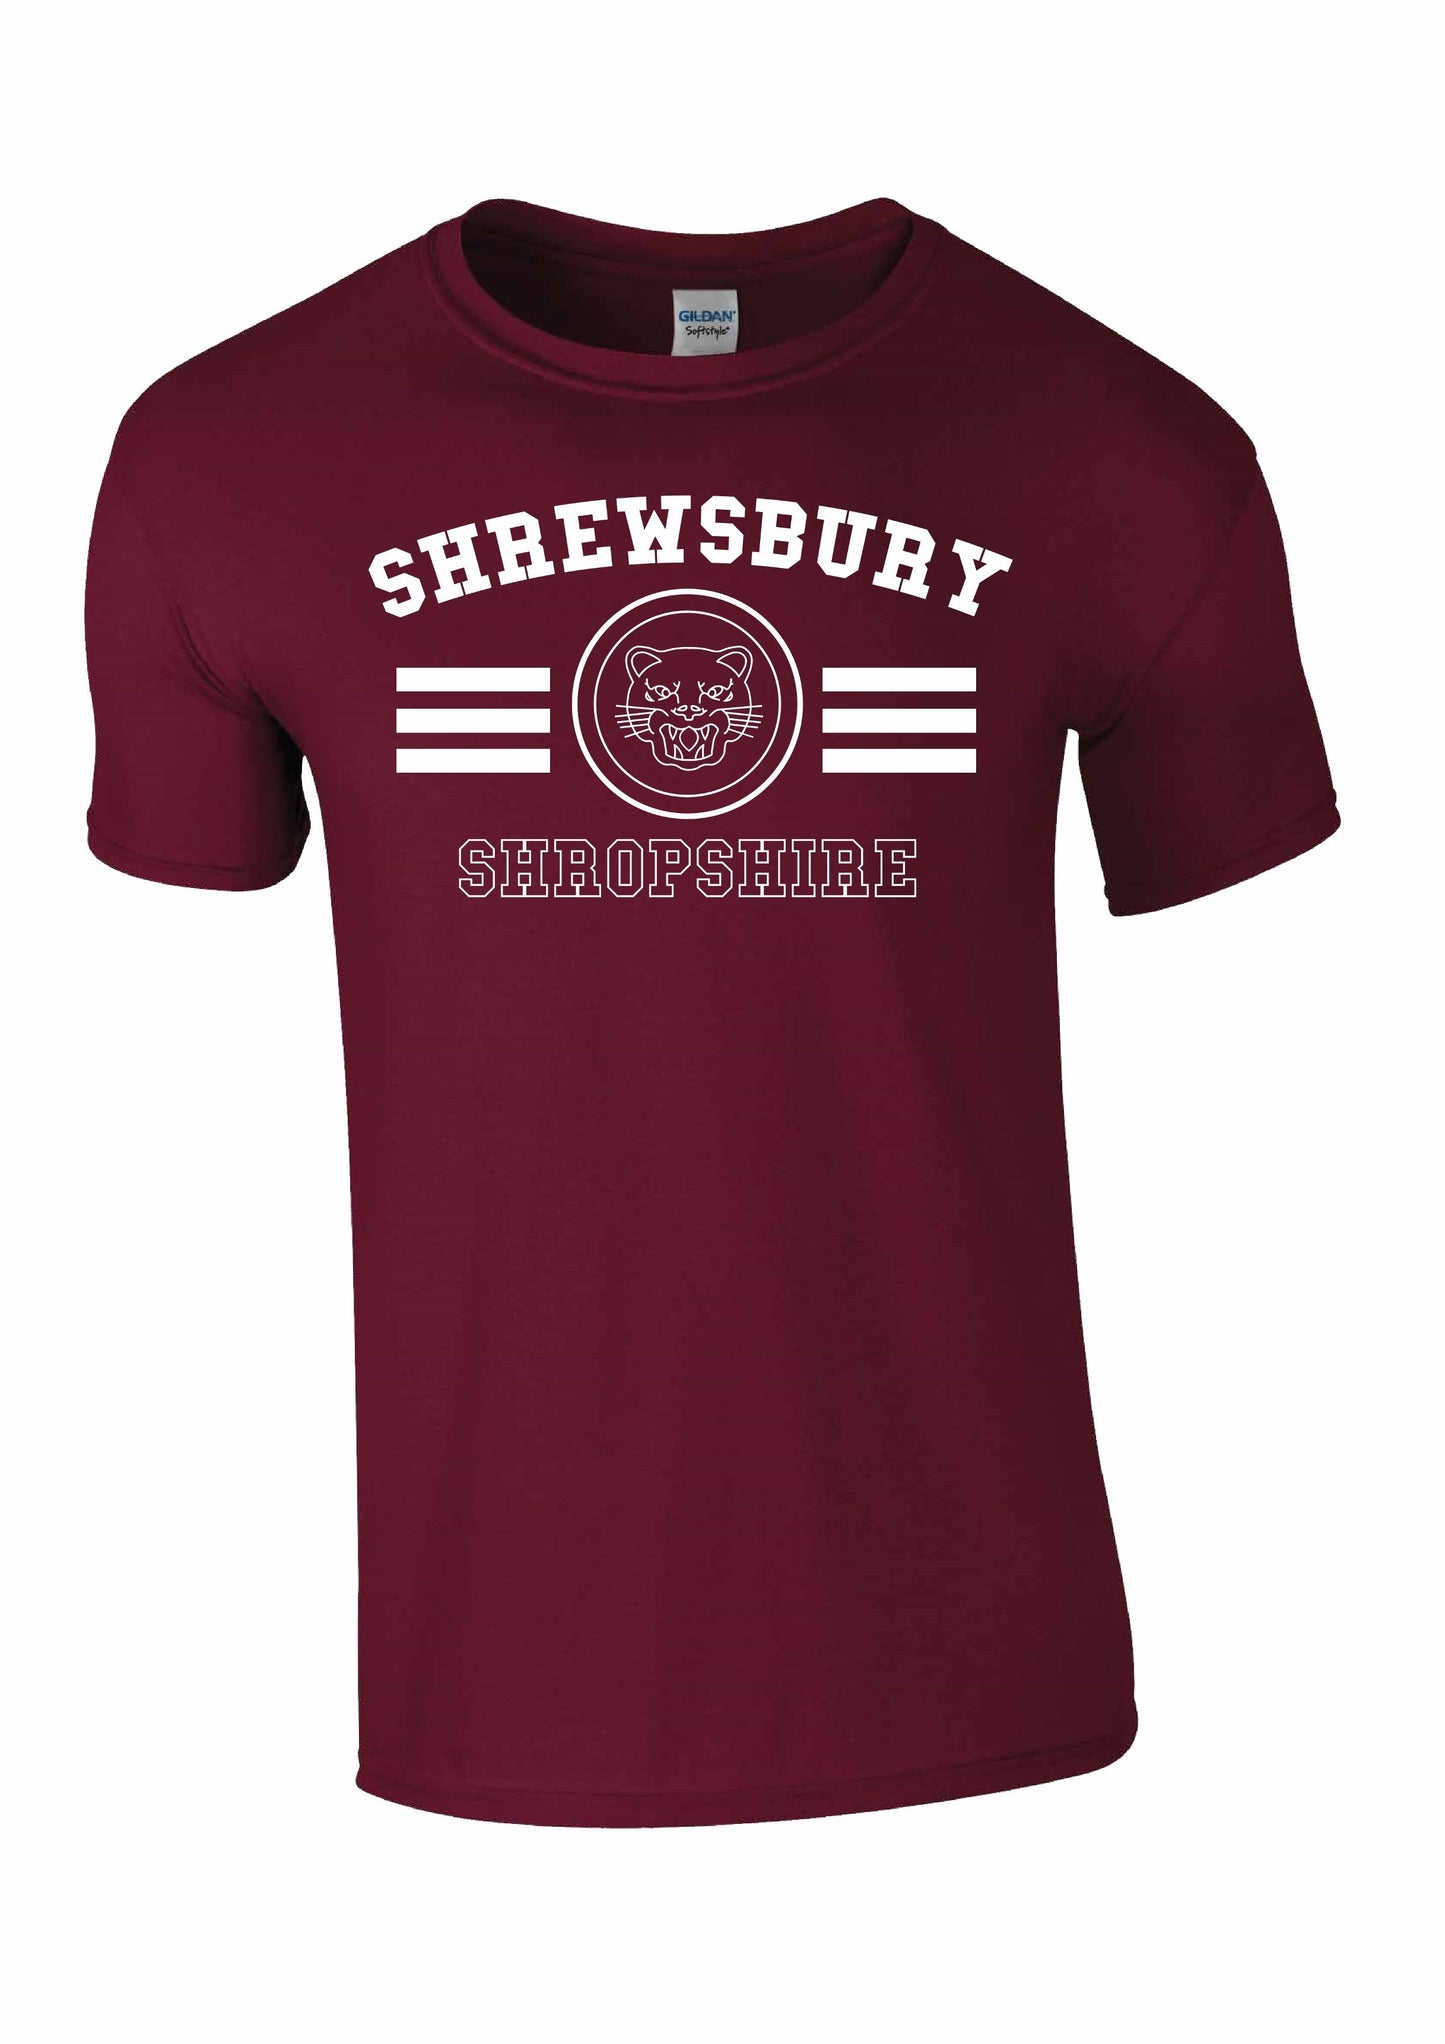 Shrewsbury Tiger T-shirt - Maroon - S